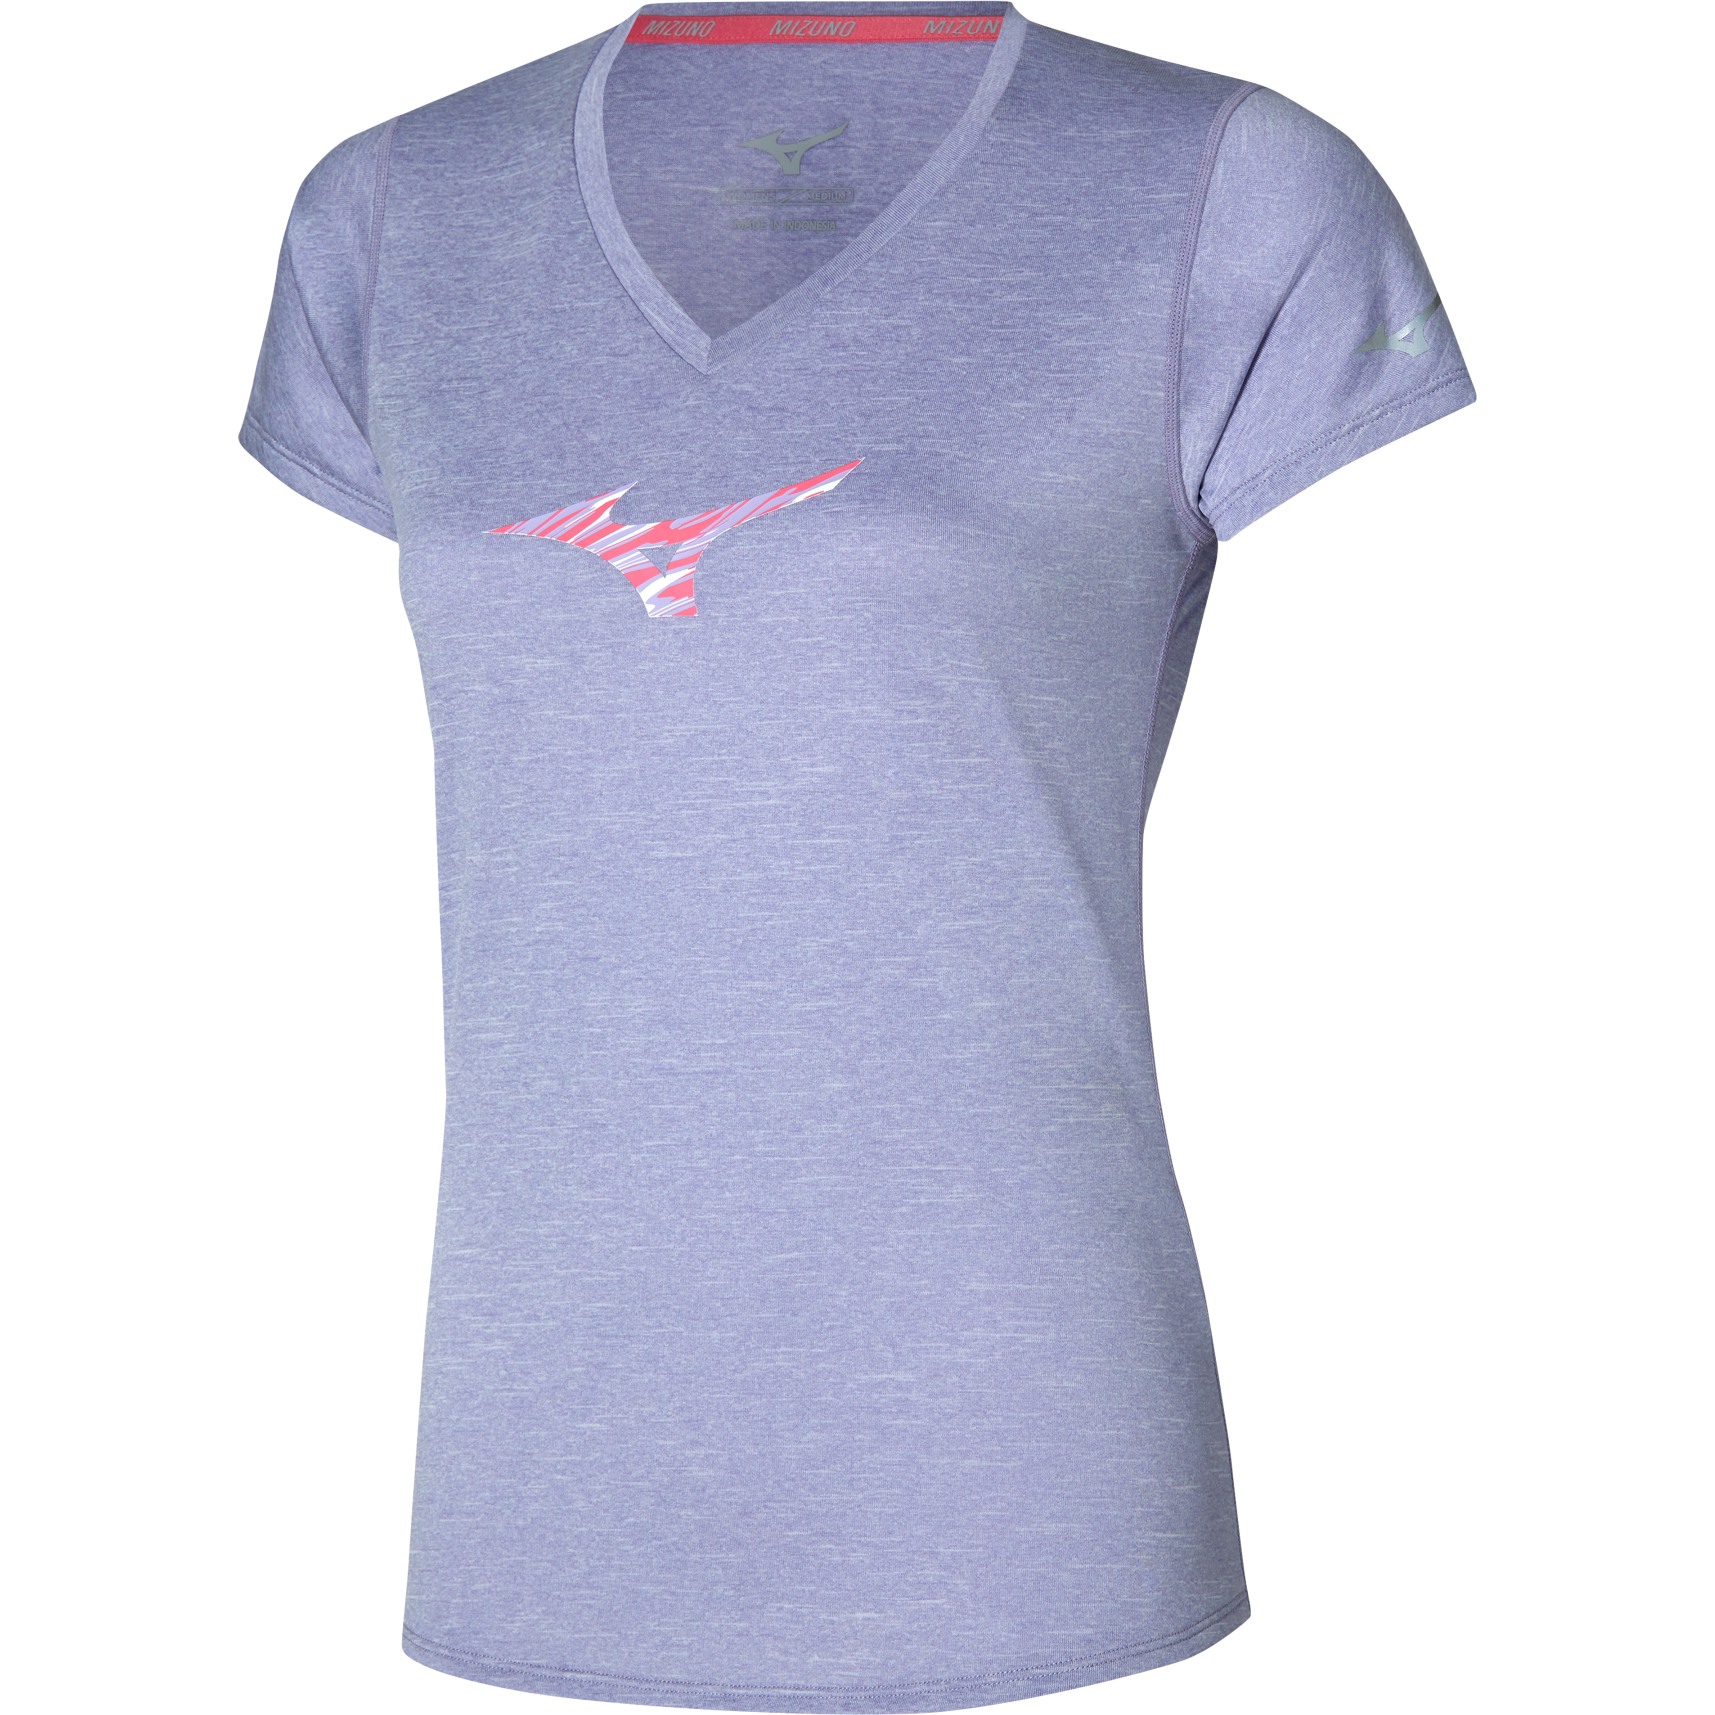 Produktbild von Mizuno Impulse Core RB T-Shirt Damen - Wisteria